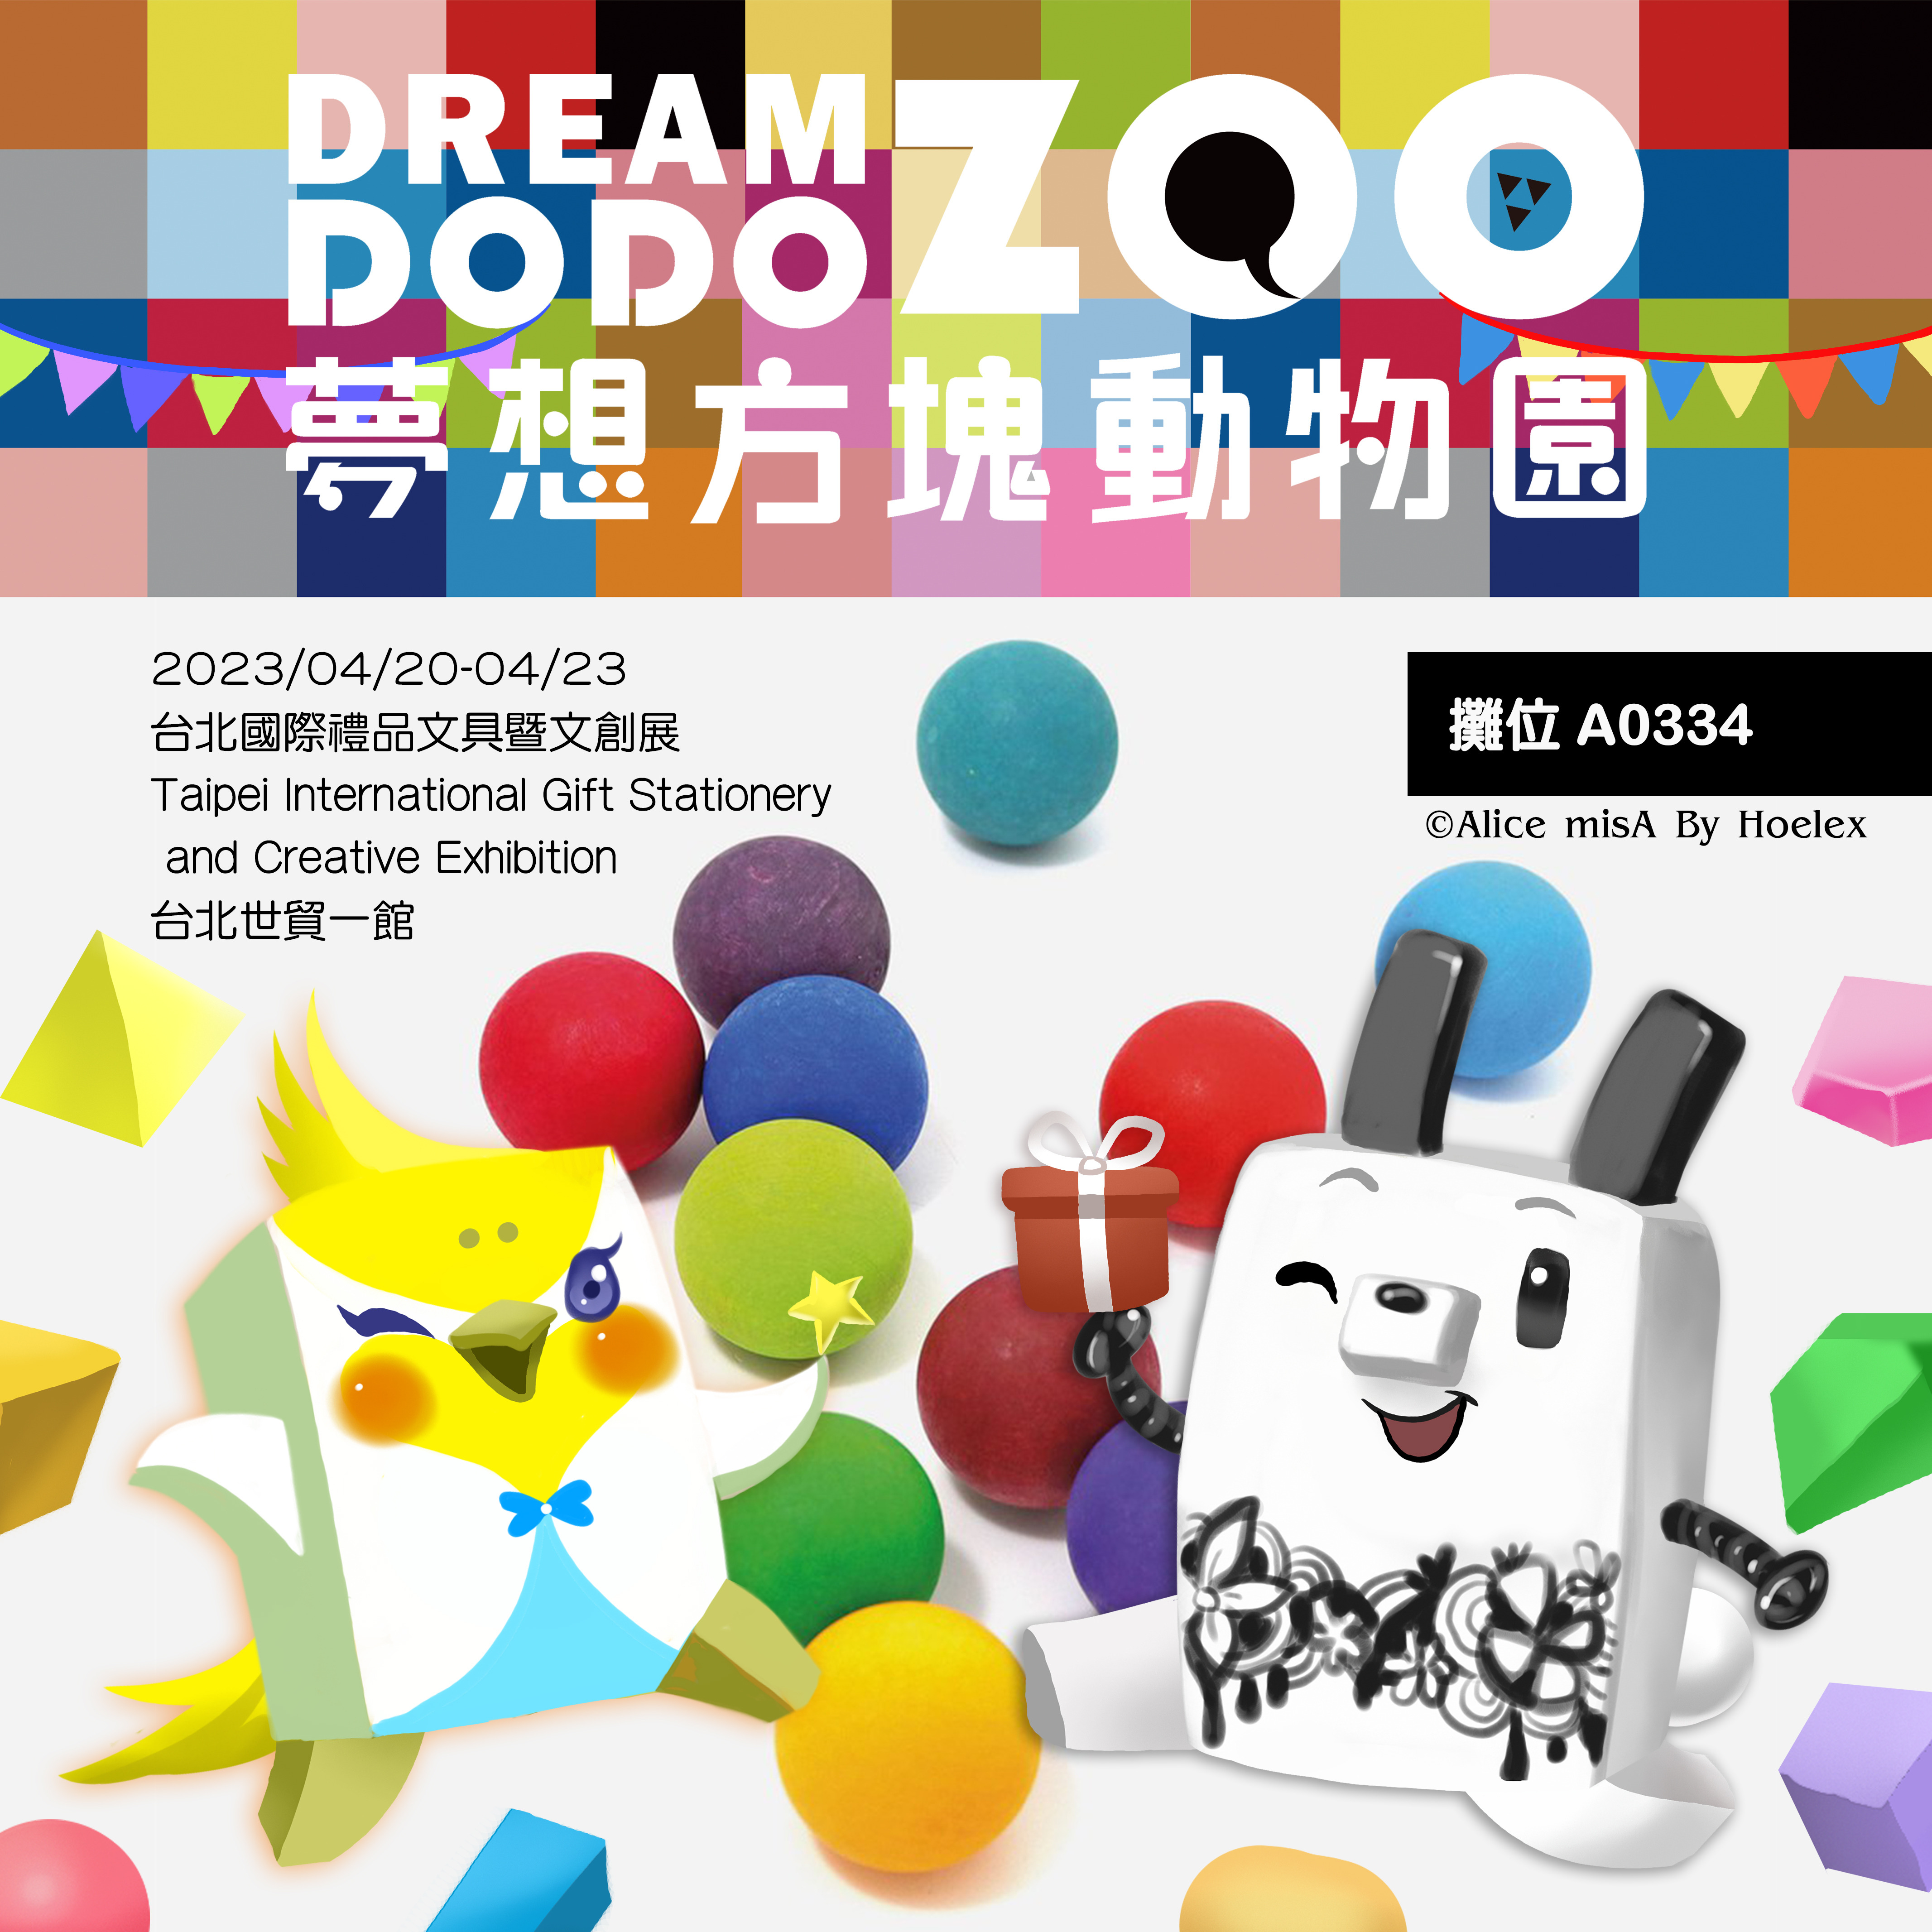 ★DODO ZOO2023年台北國際禮品文具暨文創展001.jpg